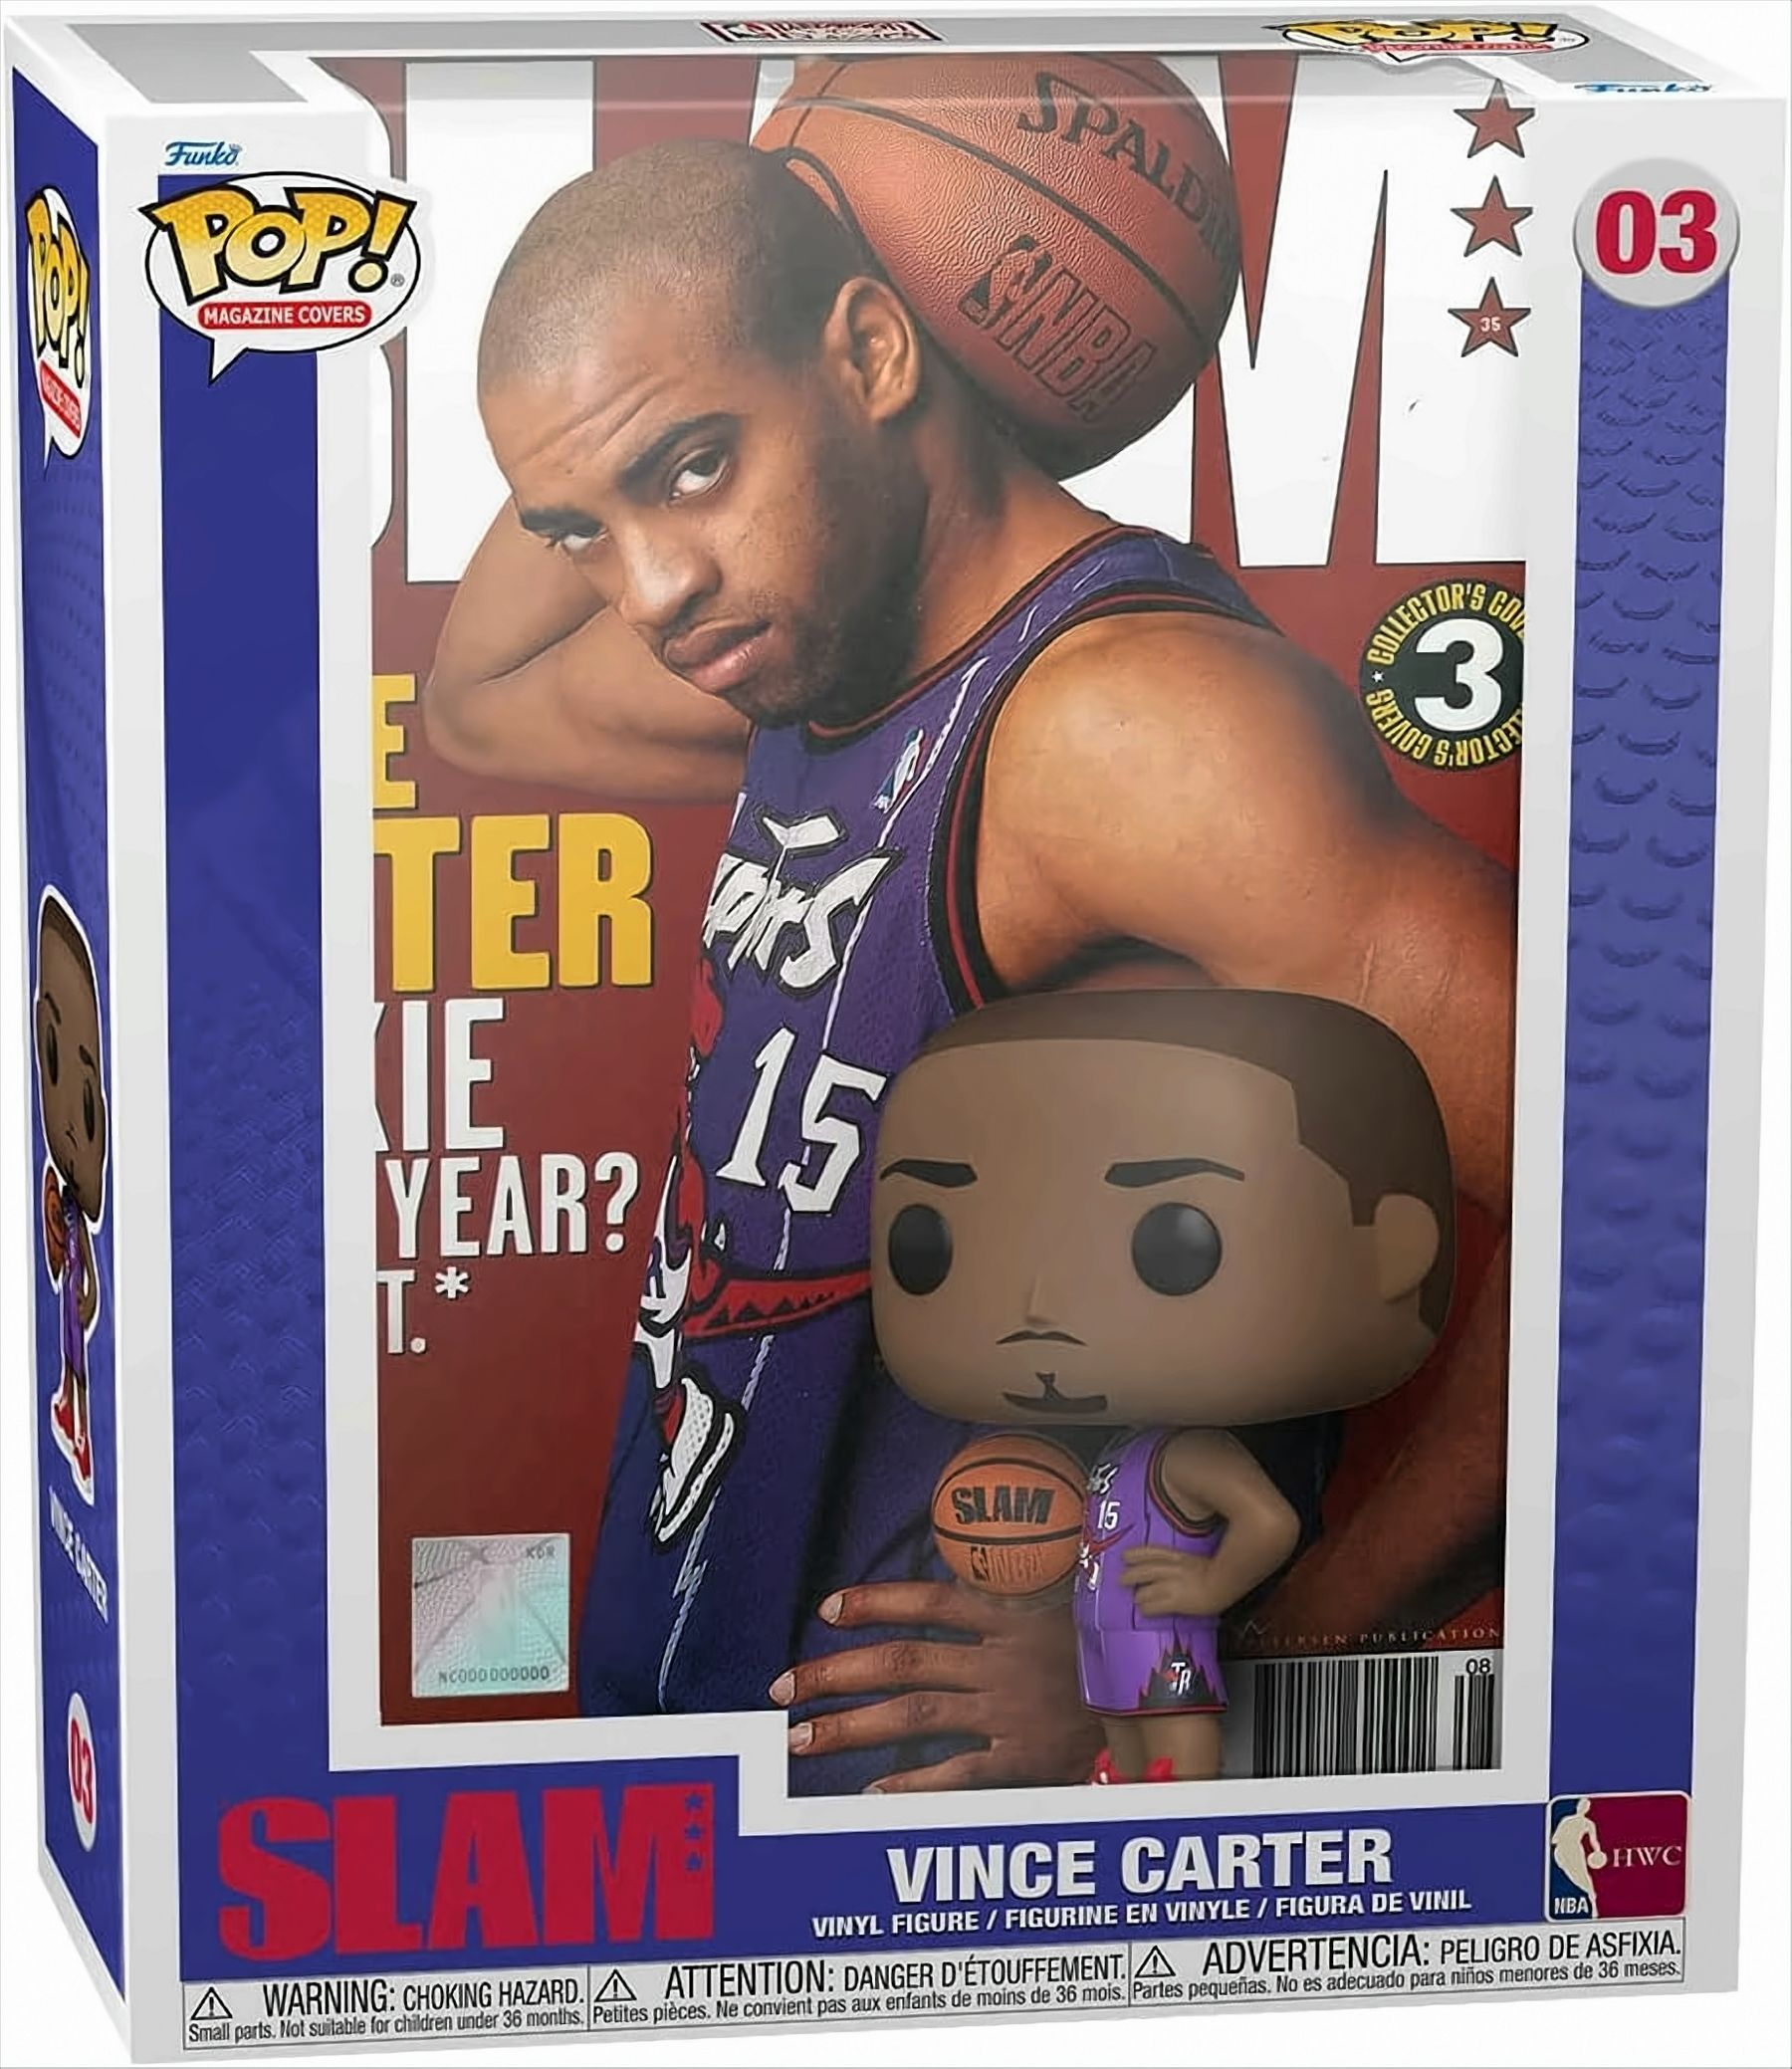 Toronto Cover Vince Carter POP / Raptors - - NBA